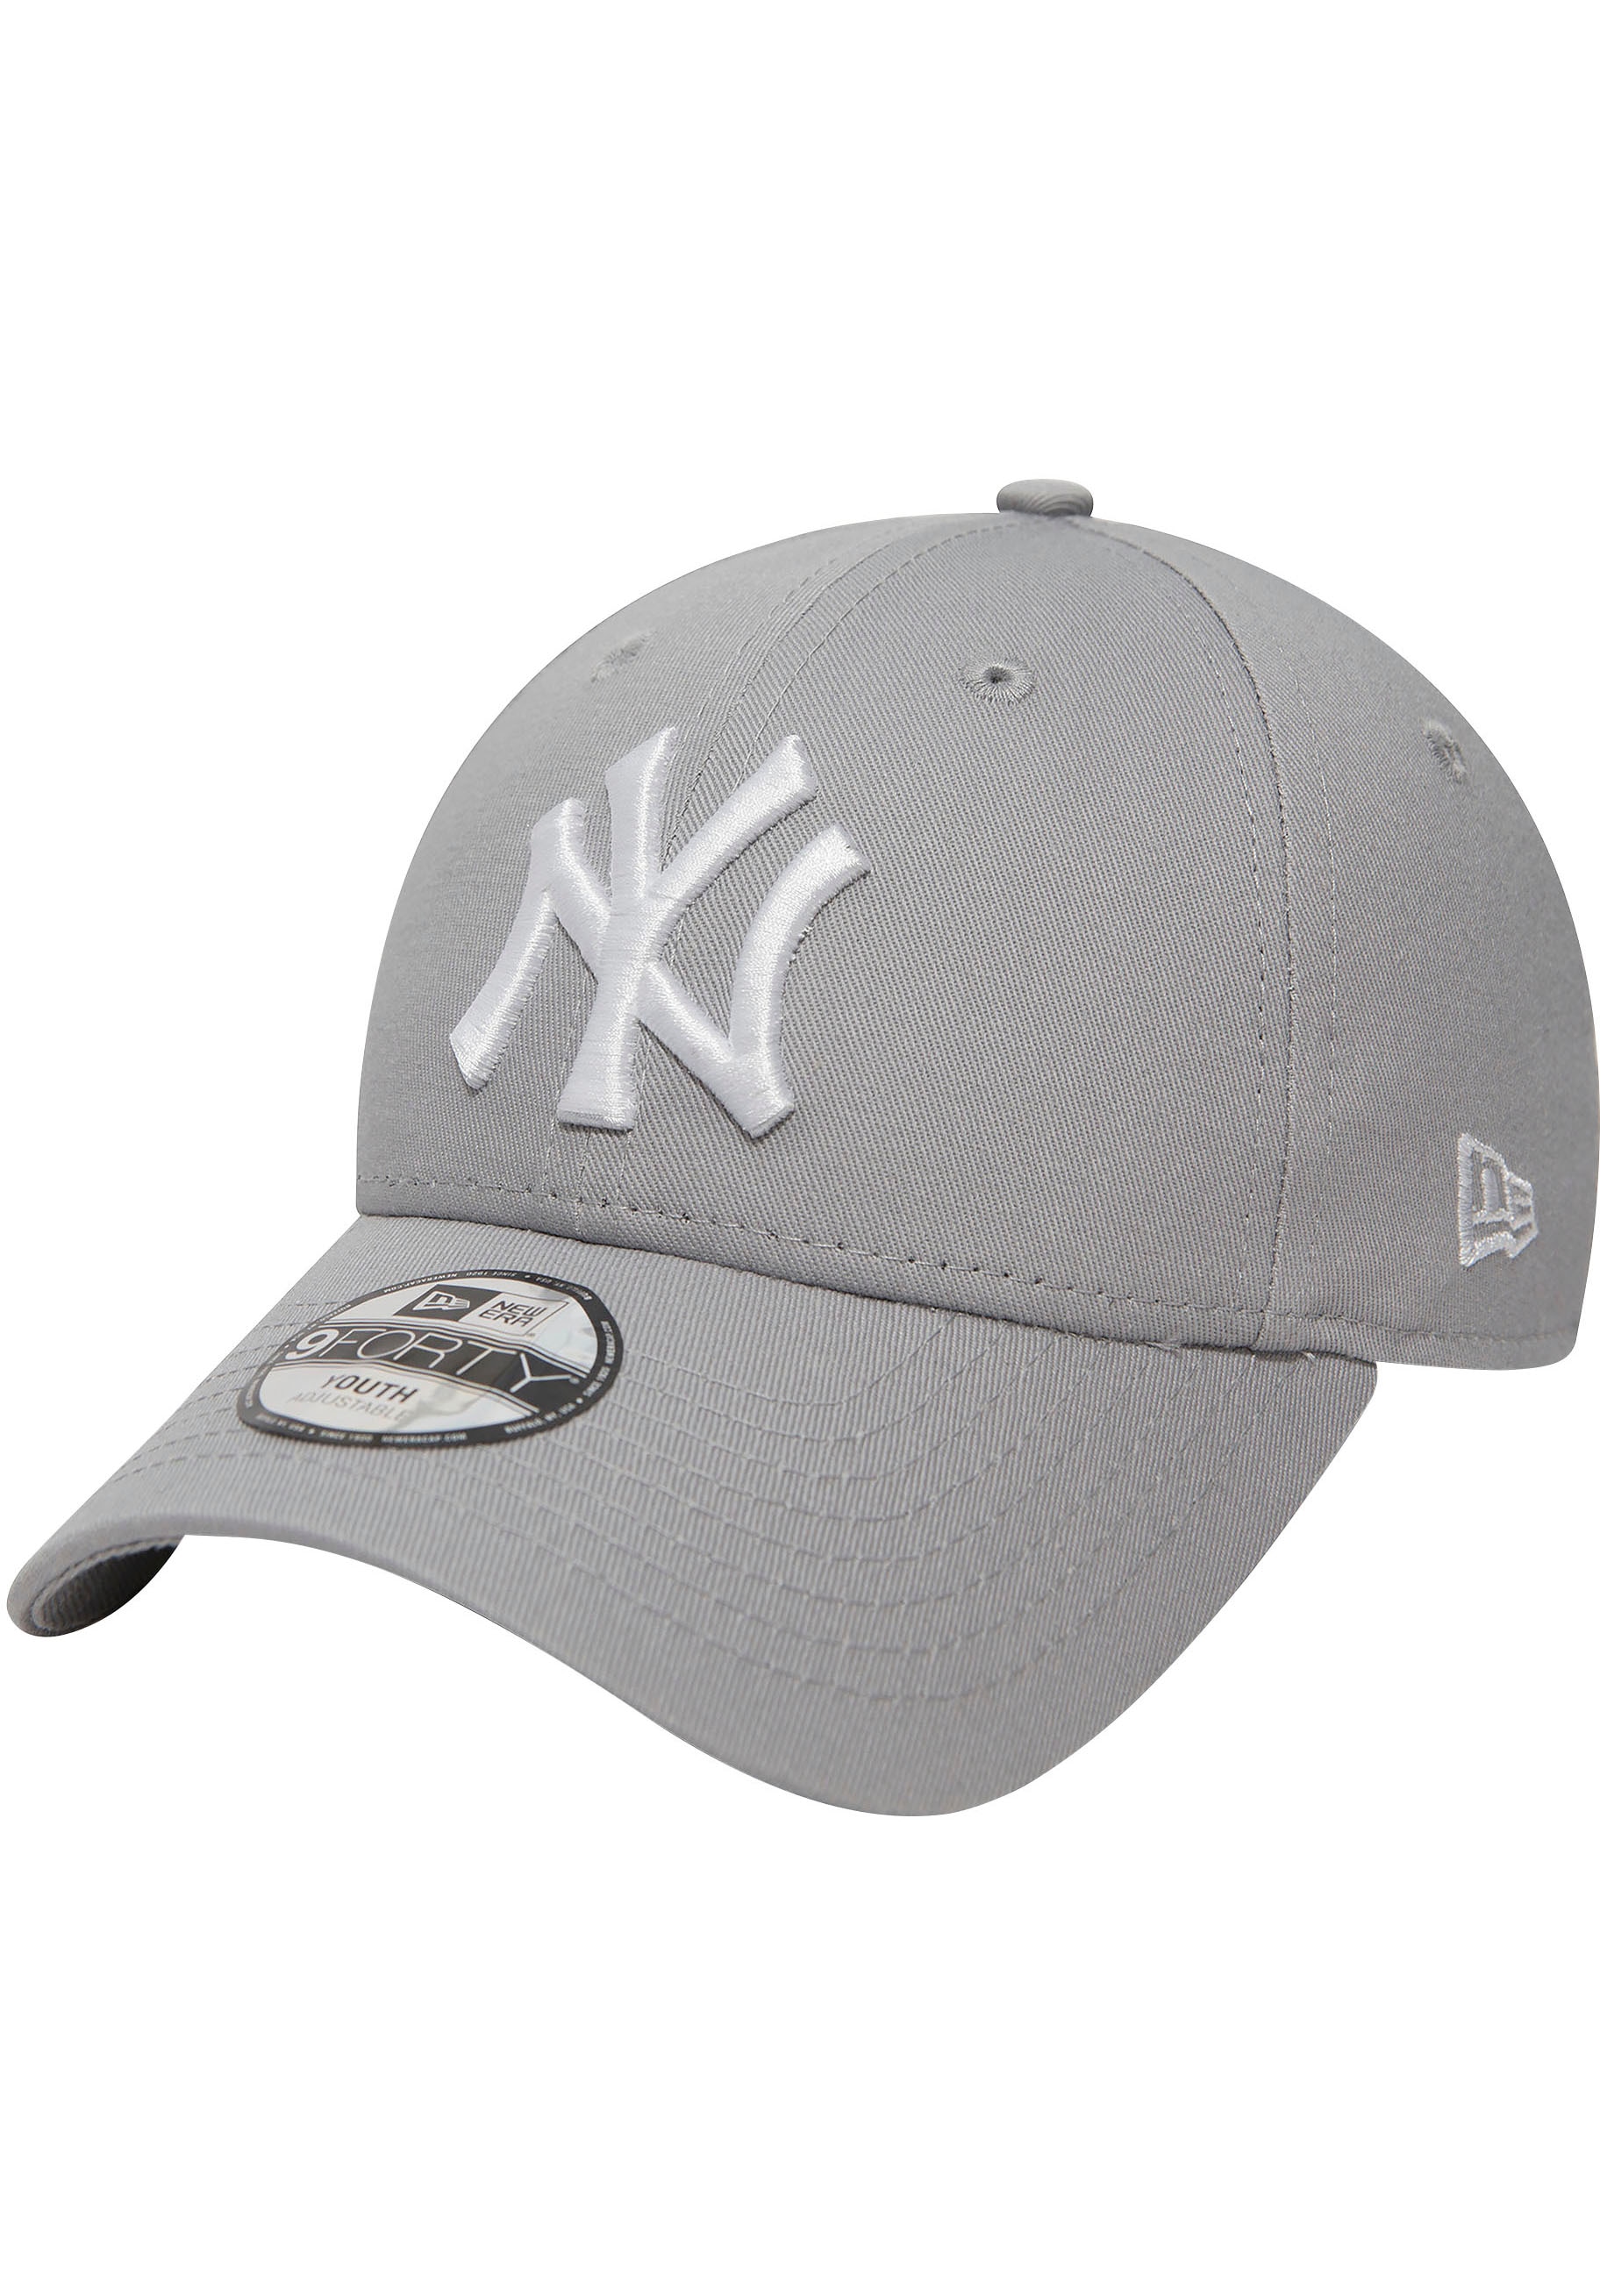 Baseball Cap »NEW YORK YANKEES N«